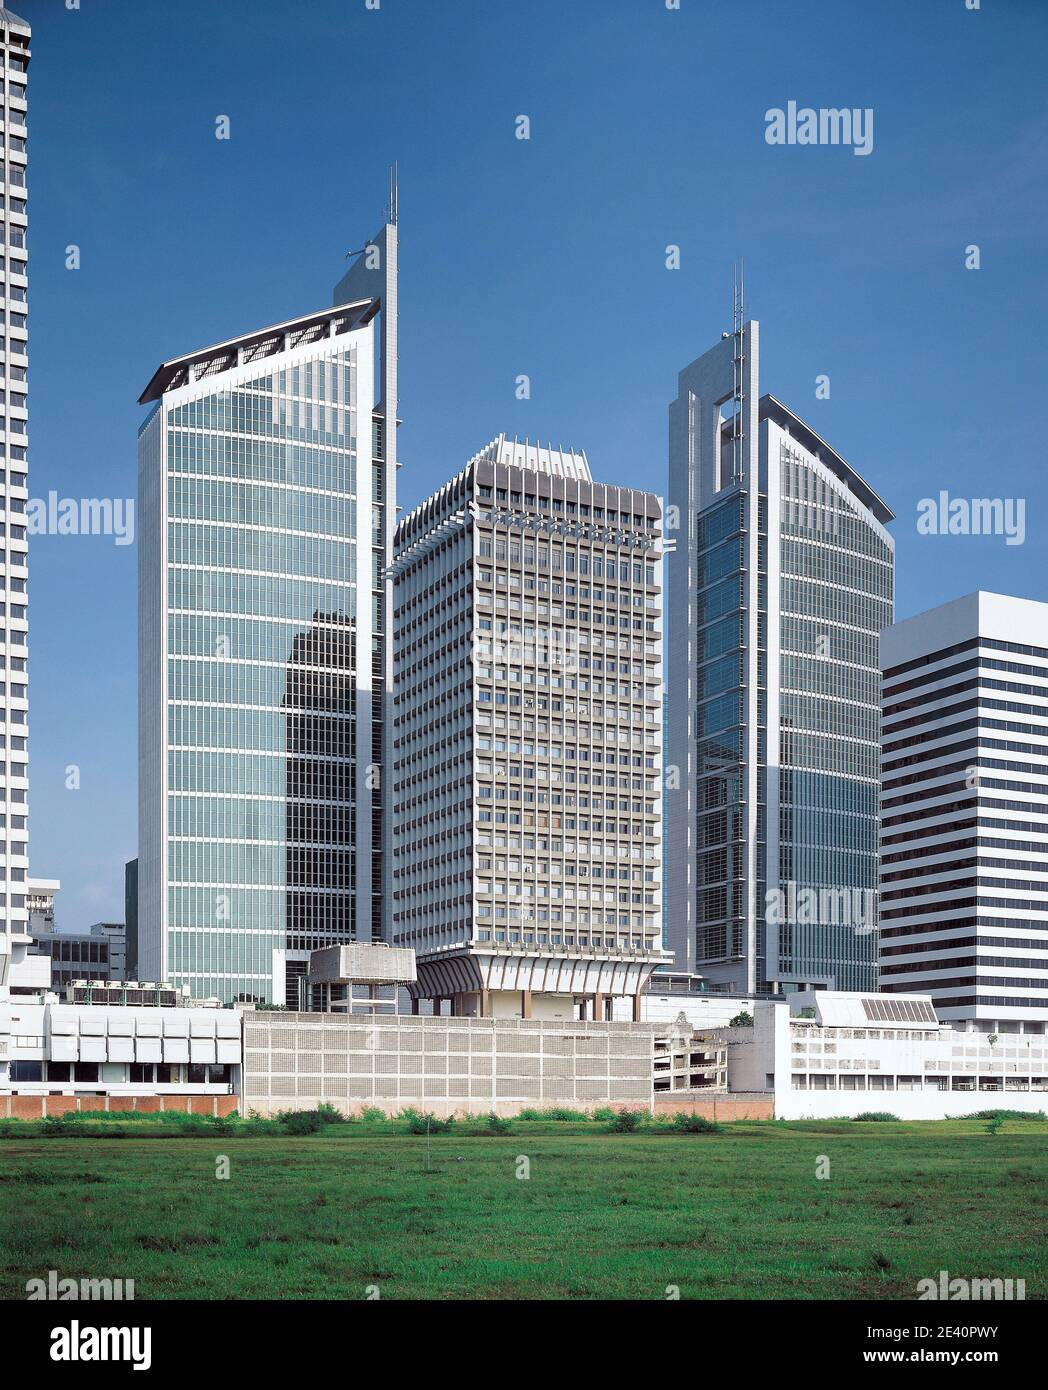 DOM032, SGX centres Singapore, Kohn, Pedersen Fox, hochhaus, high-rise building, multi-story building, grattacielo, rascacielos, SGX centres Singapore Stock Photo